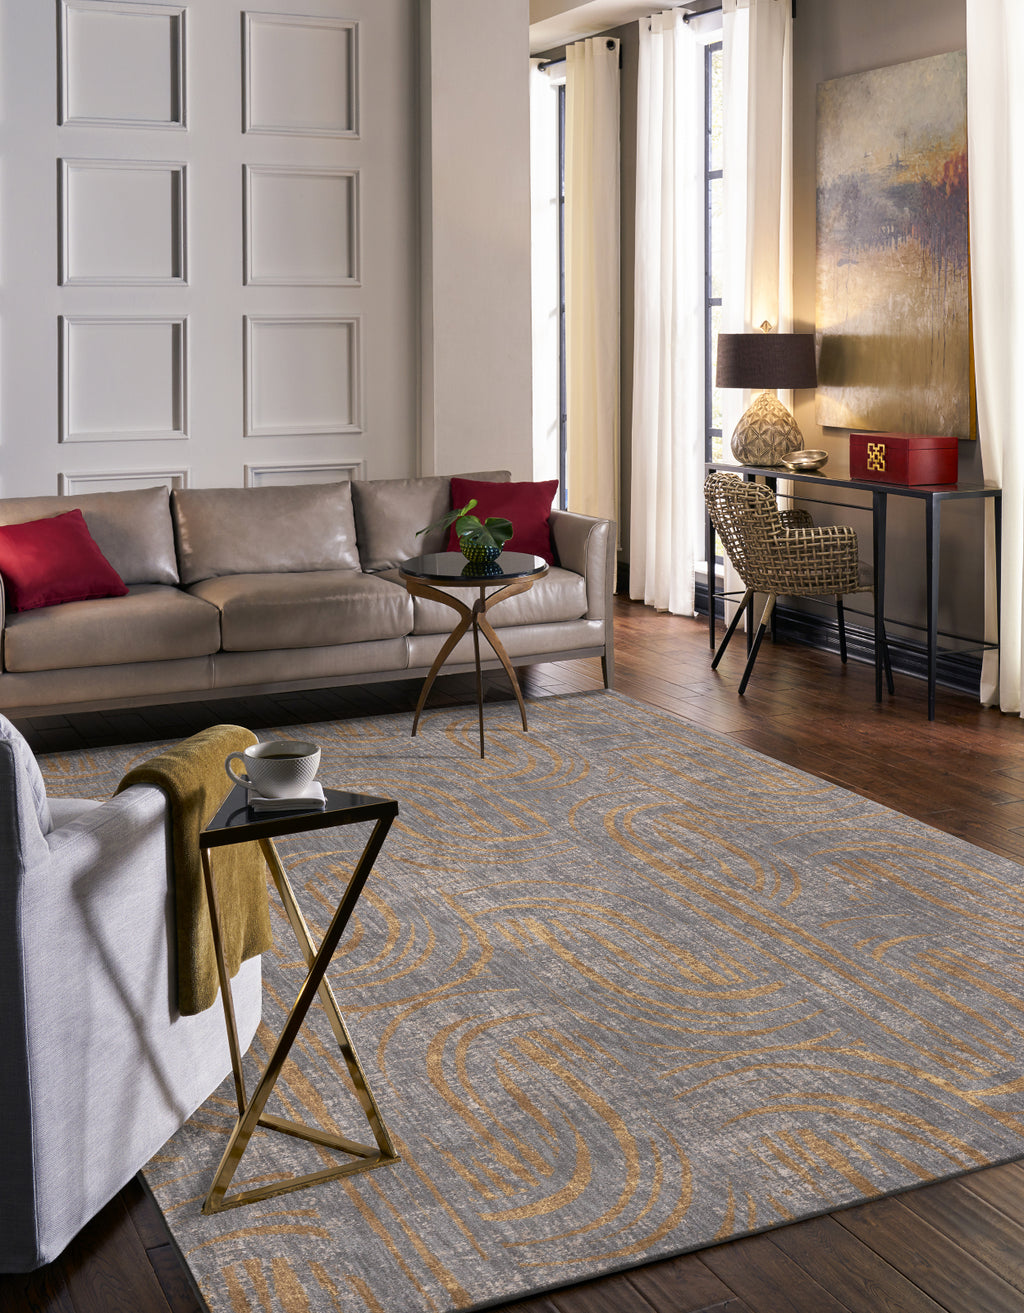 Karastan Artisan Equilibrium Smokey Grey Area Rug by Scott Living Room Image Feature